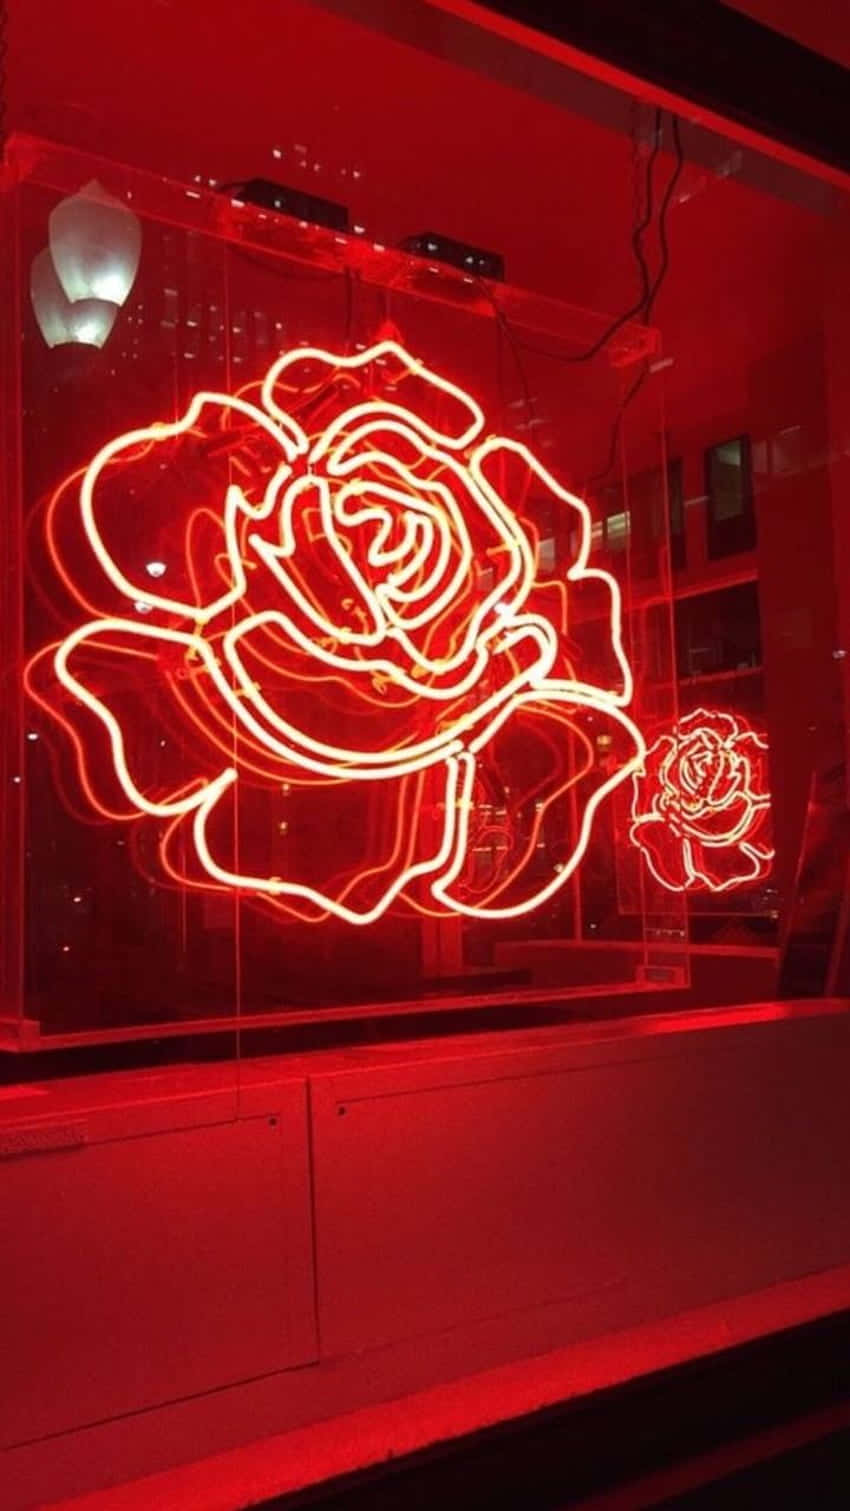 Aesthetic Grunge Red Neon Rose Flower Signs Wallpaper